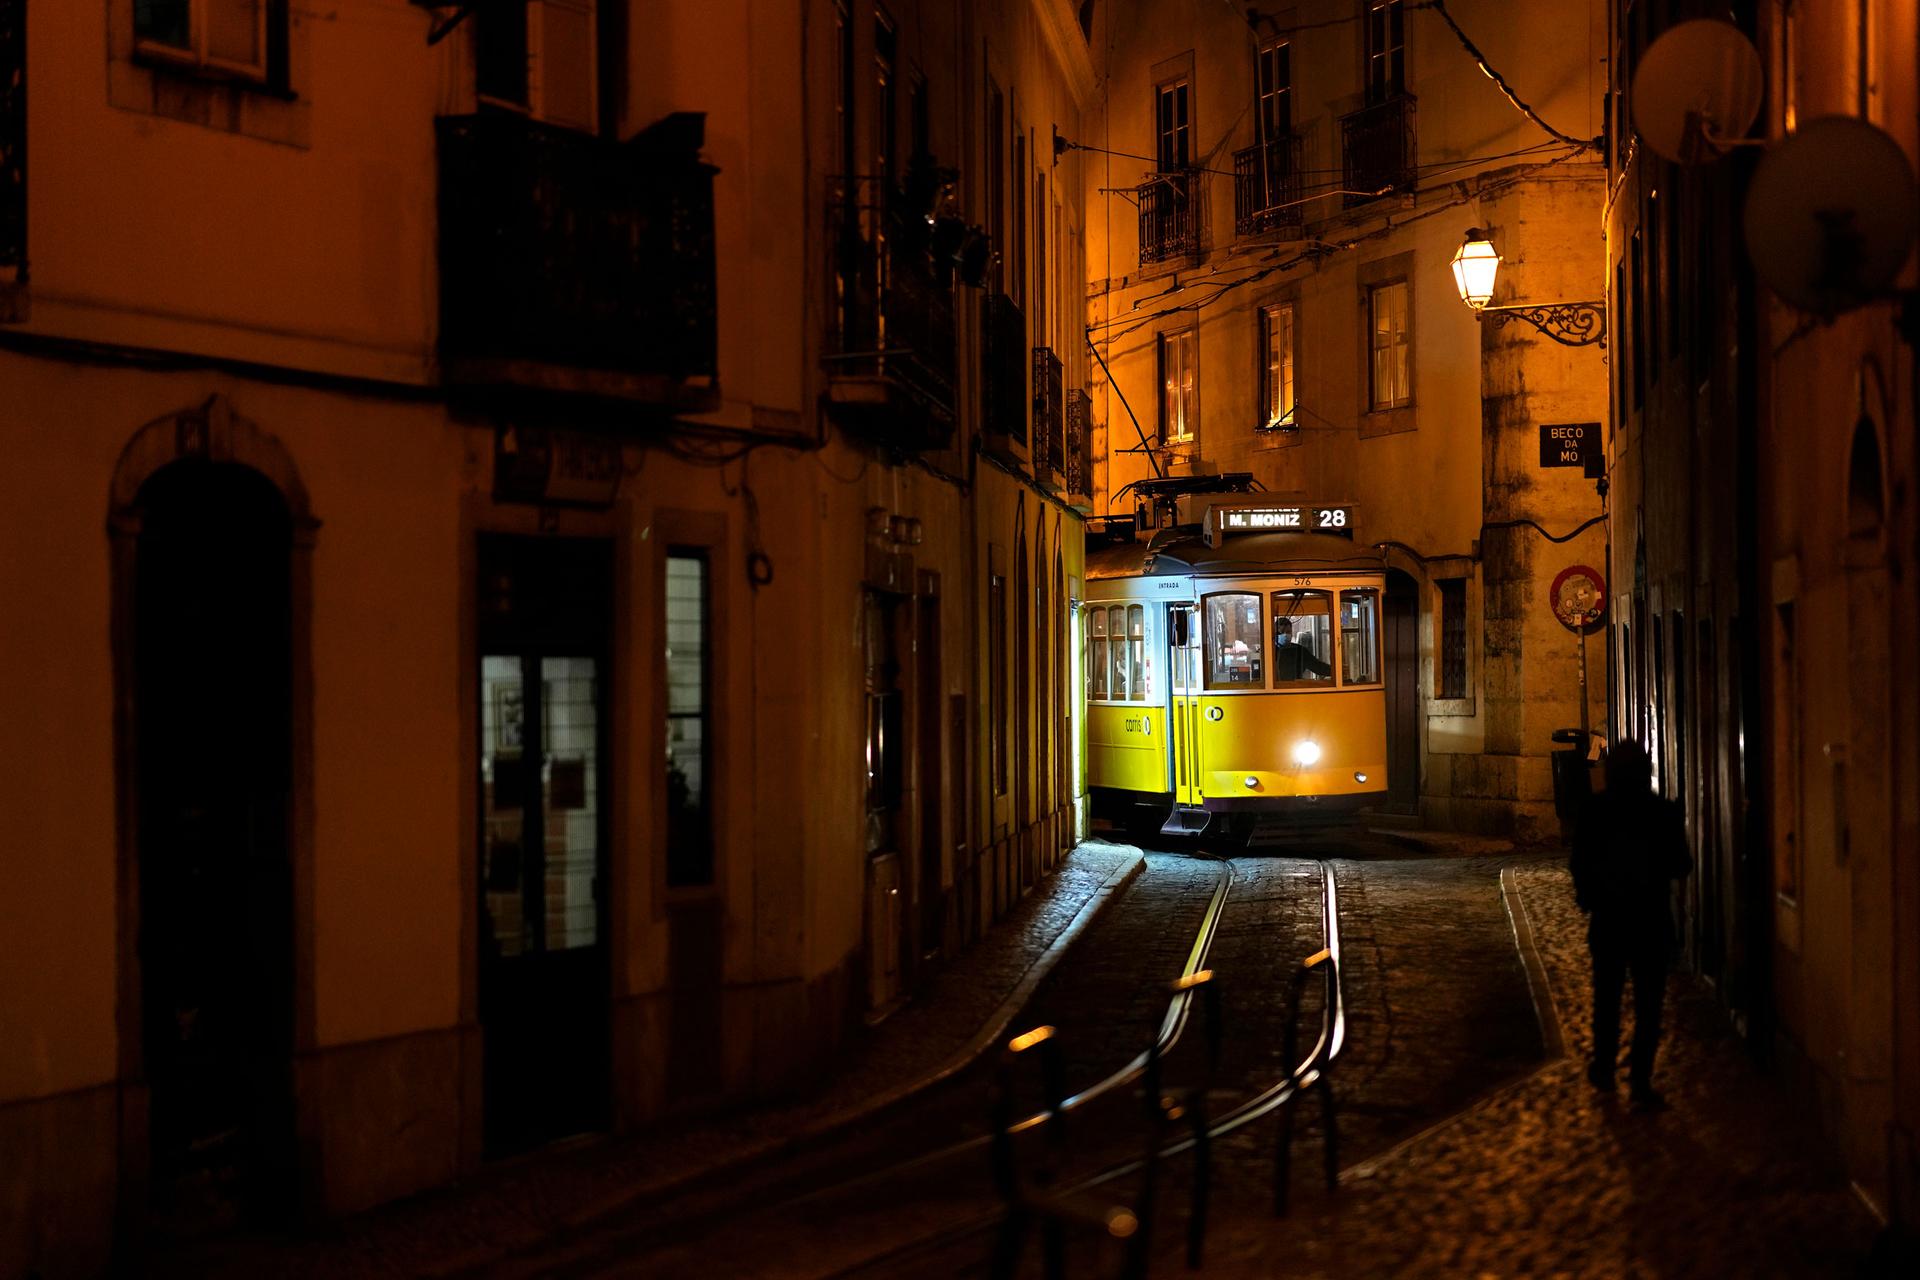 A number 28 tram drives through a narrow street in Lisbon's old Alfama neighborhood, Friday, Dec. 17, 2021.